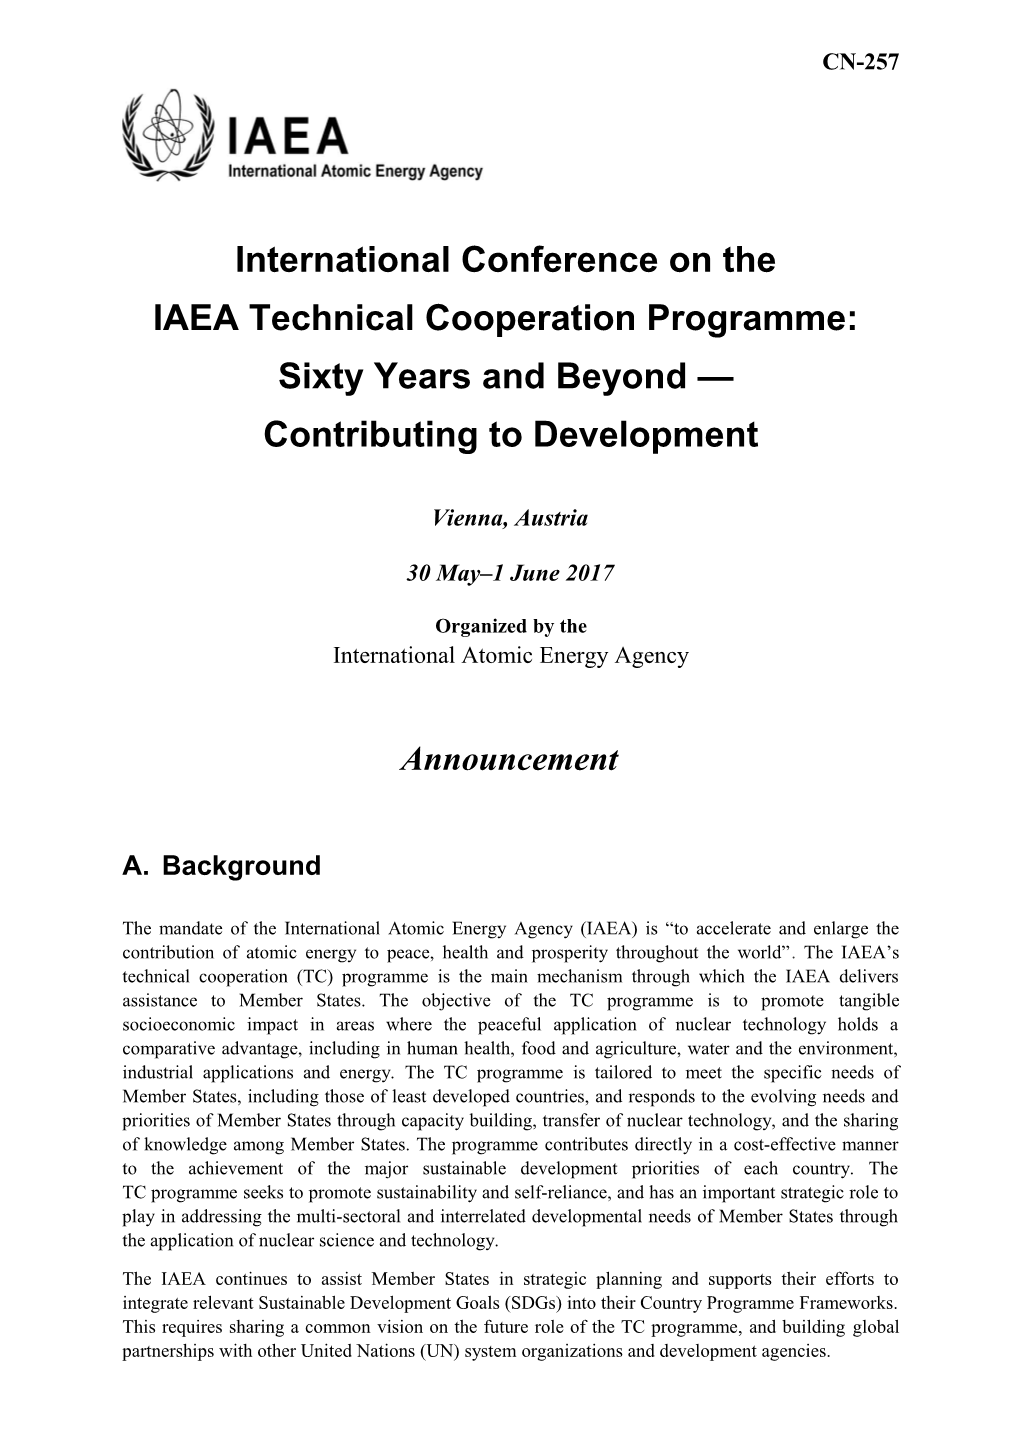 IAEA Technical Cooperation Programme